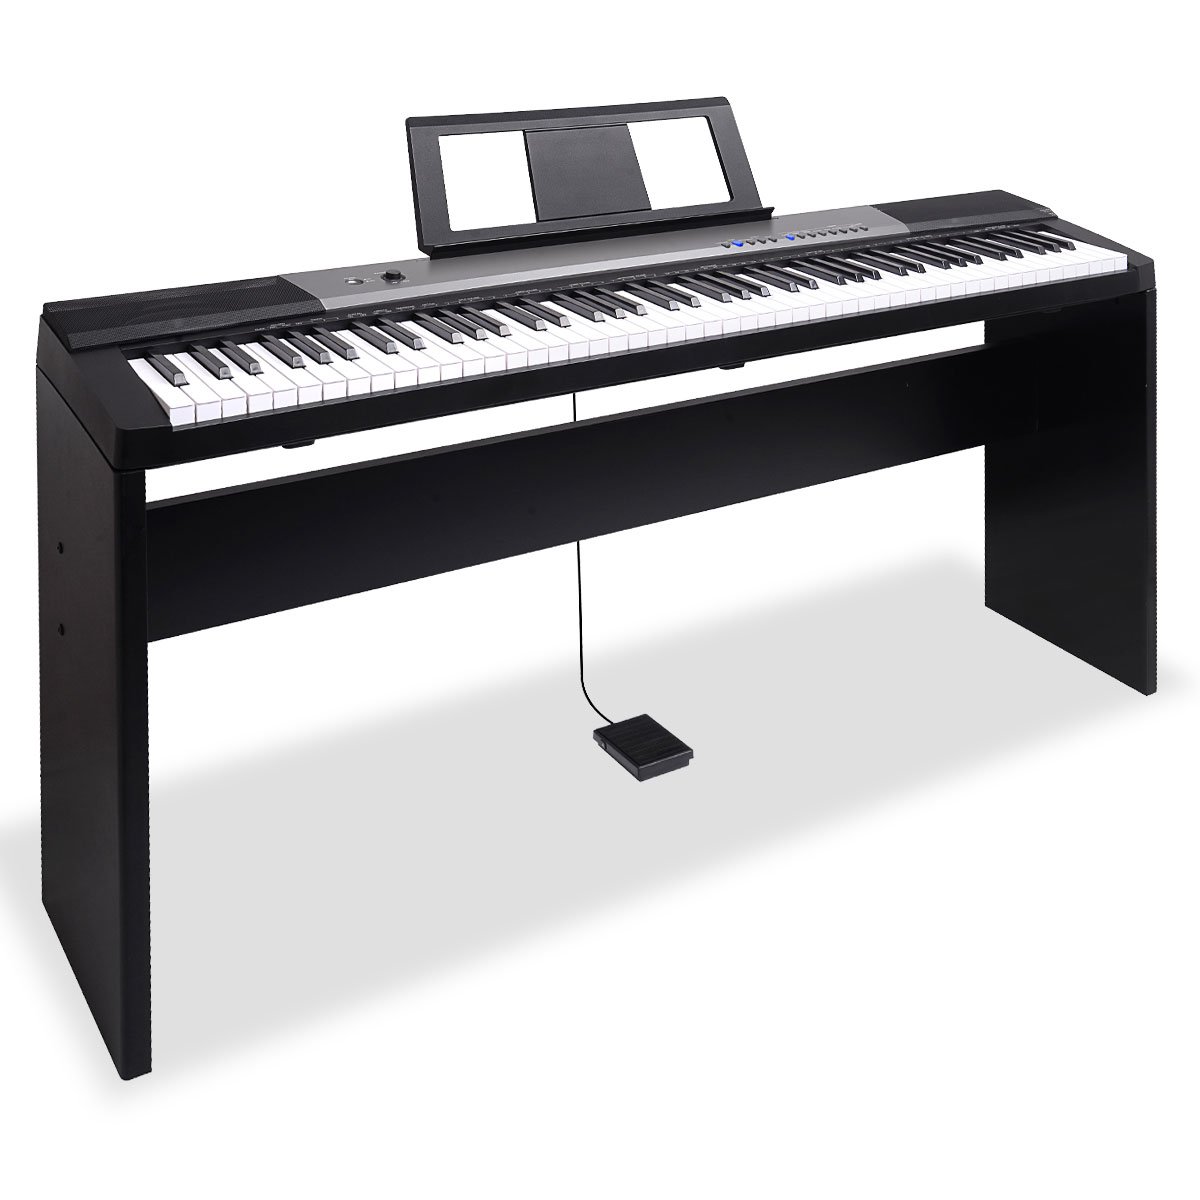 Karrera 88 Keys Electronic Keyboard Piano with Stand Black 2